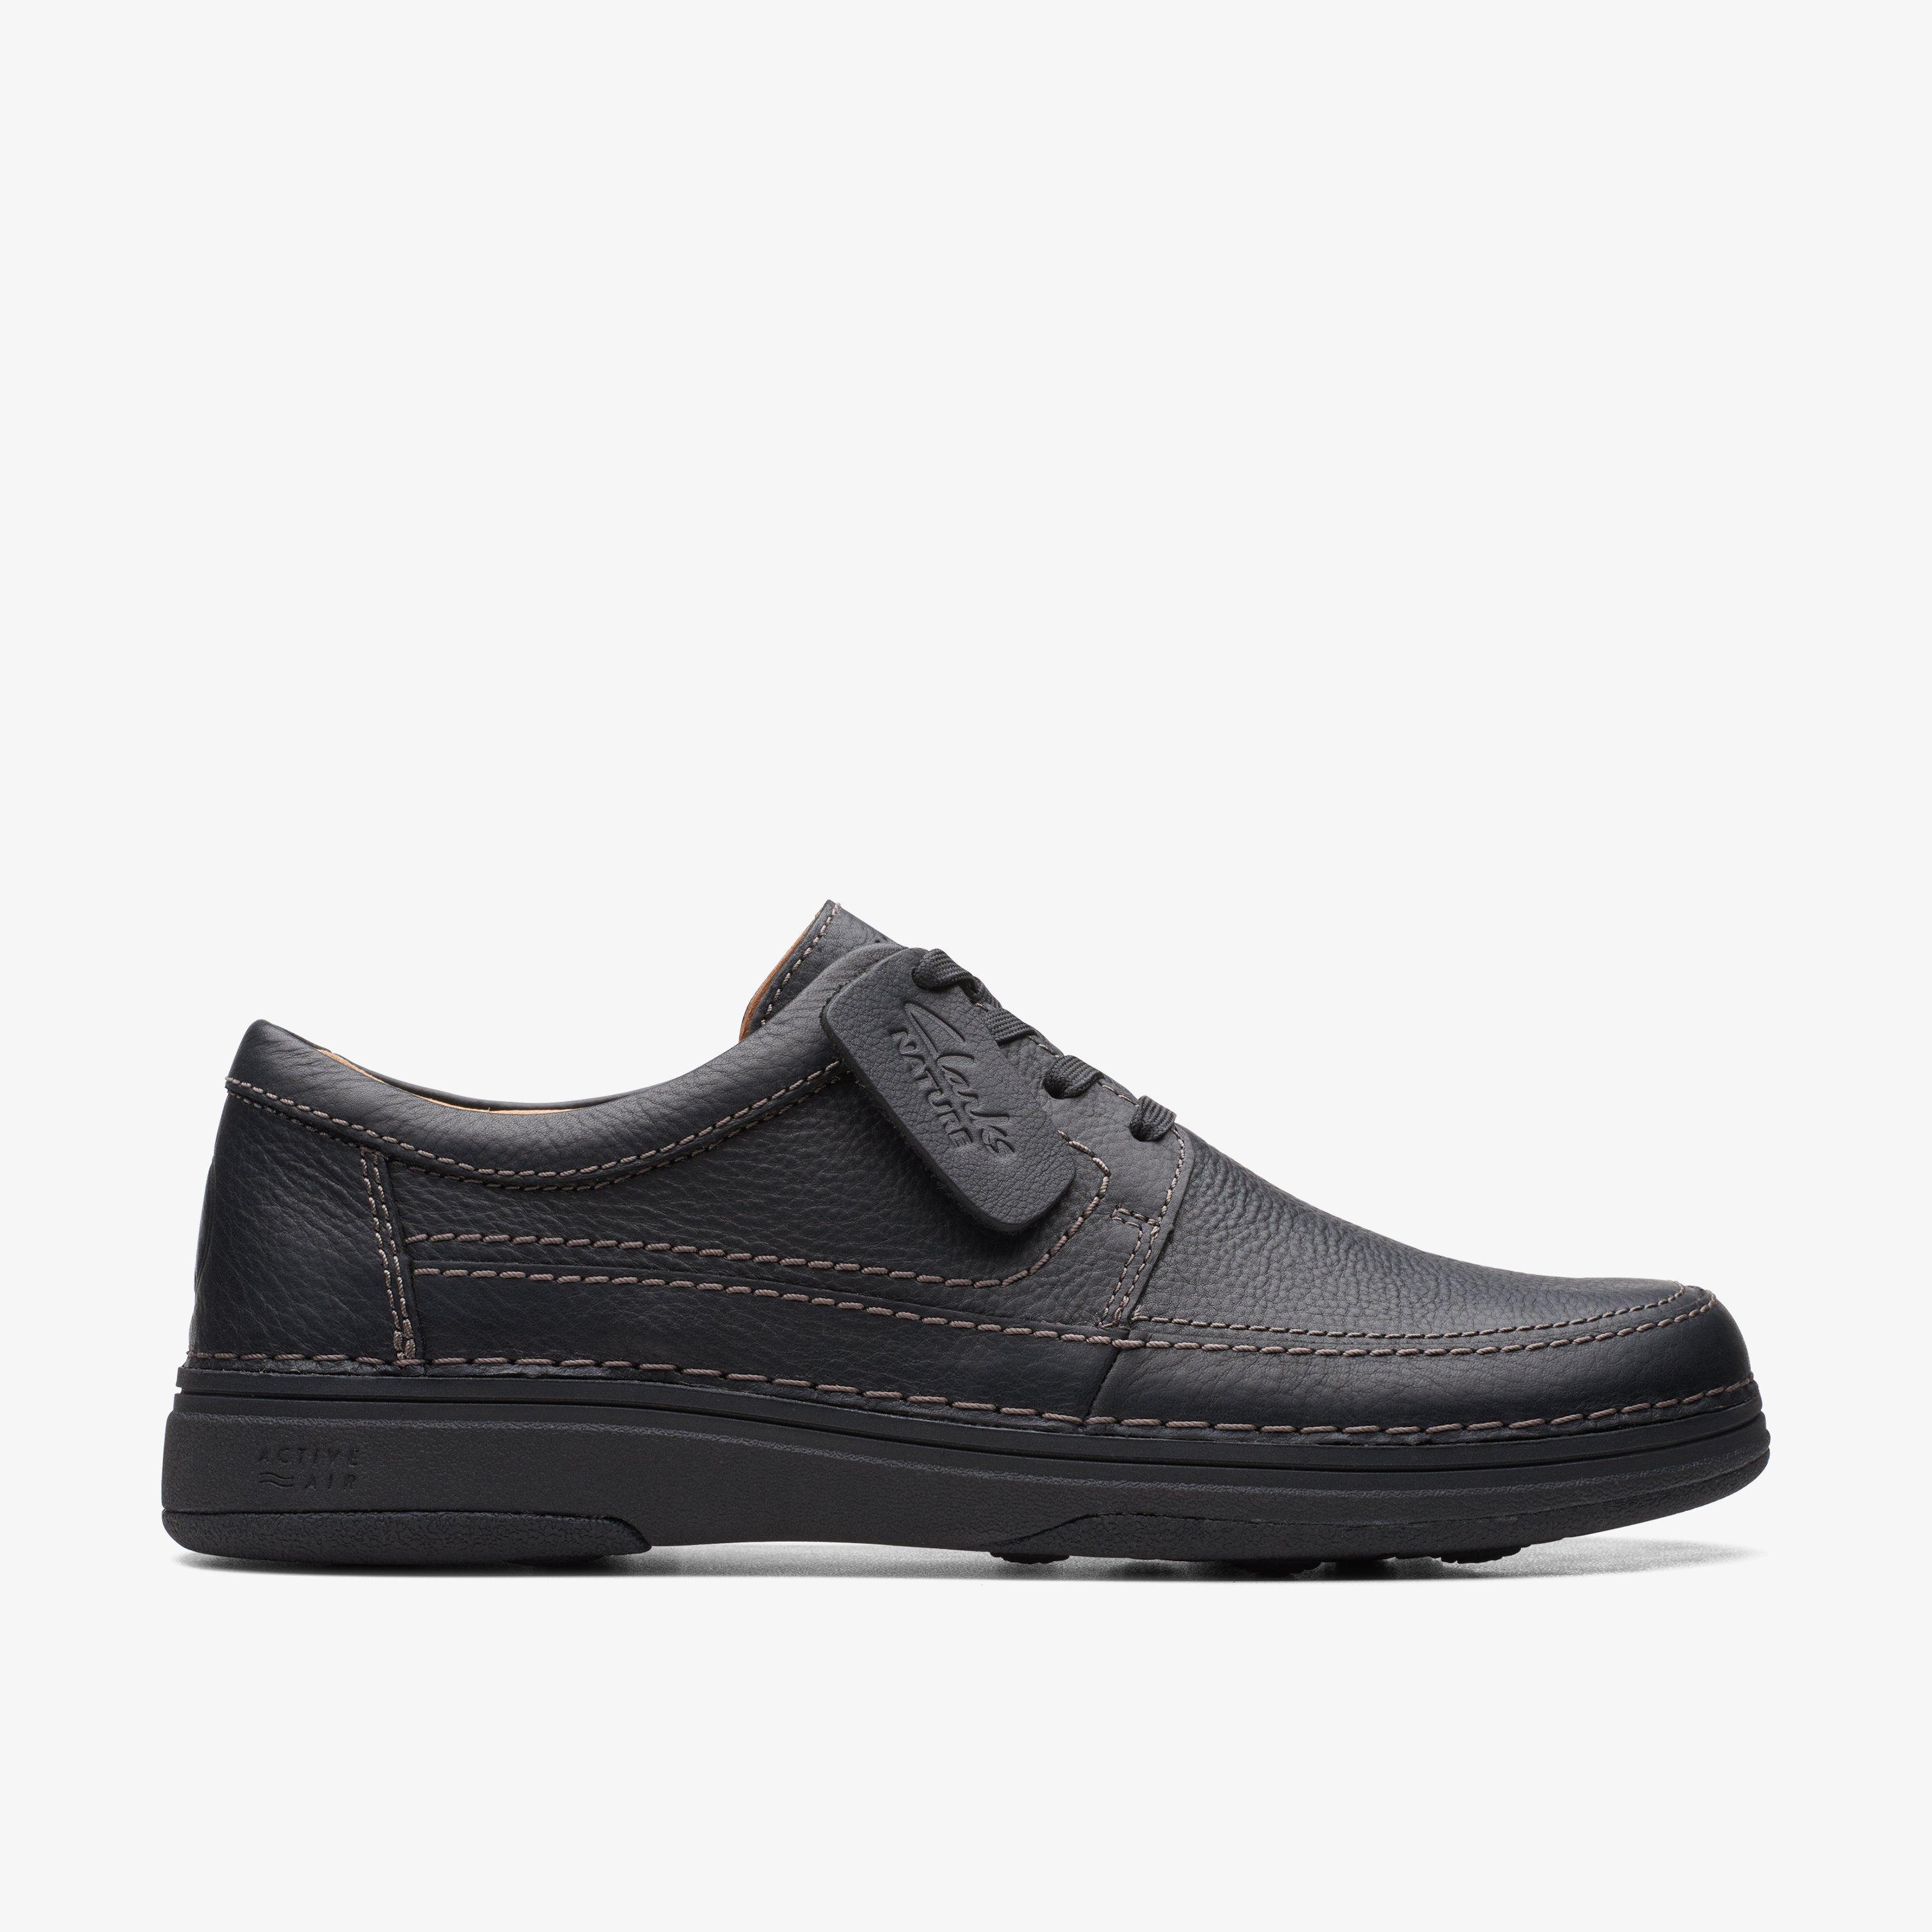  Clarks Men's Sneaker, Black Black Leather, 7.5